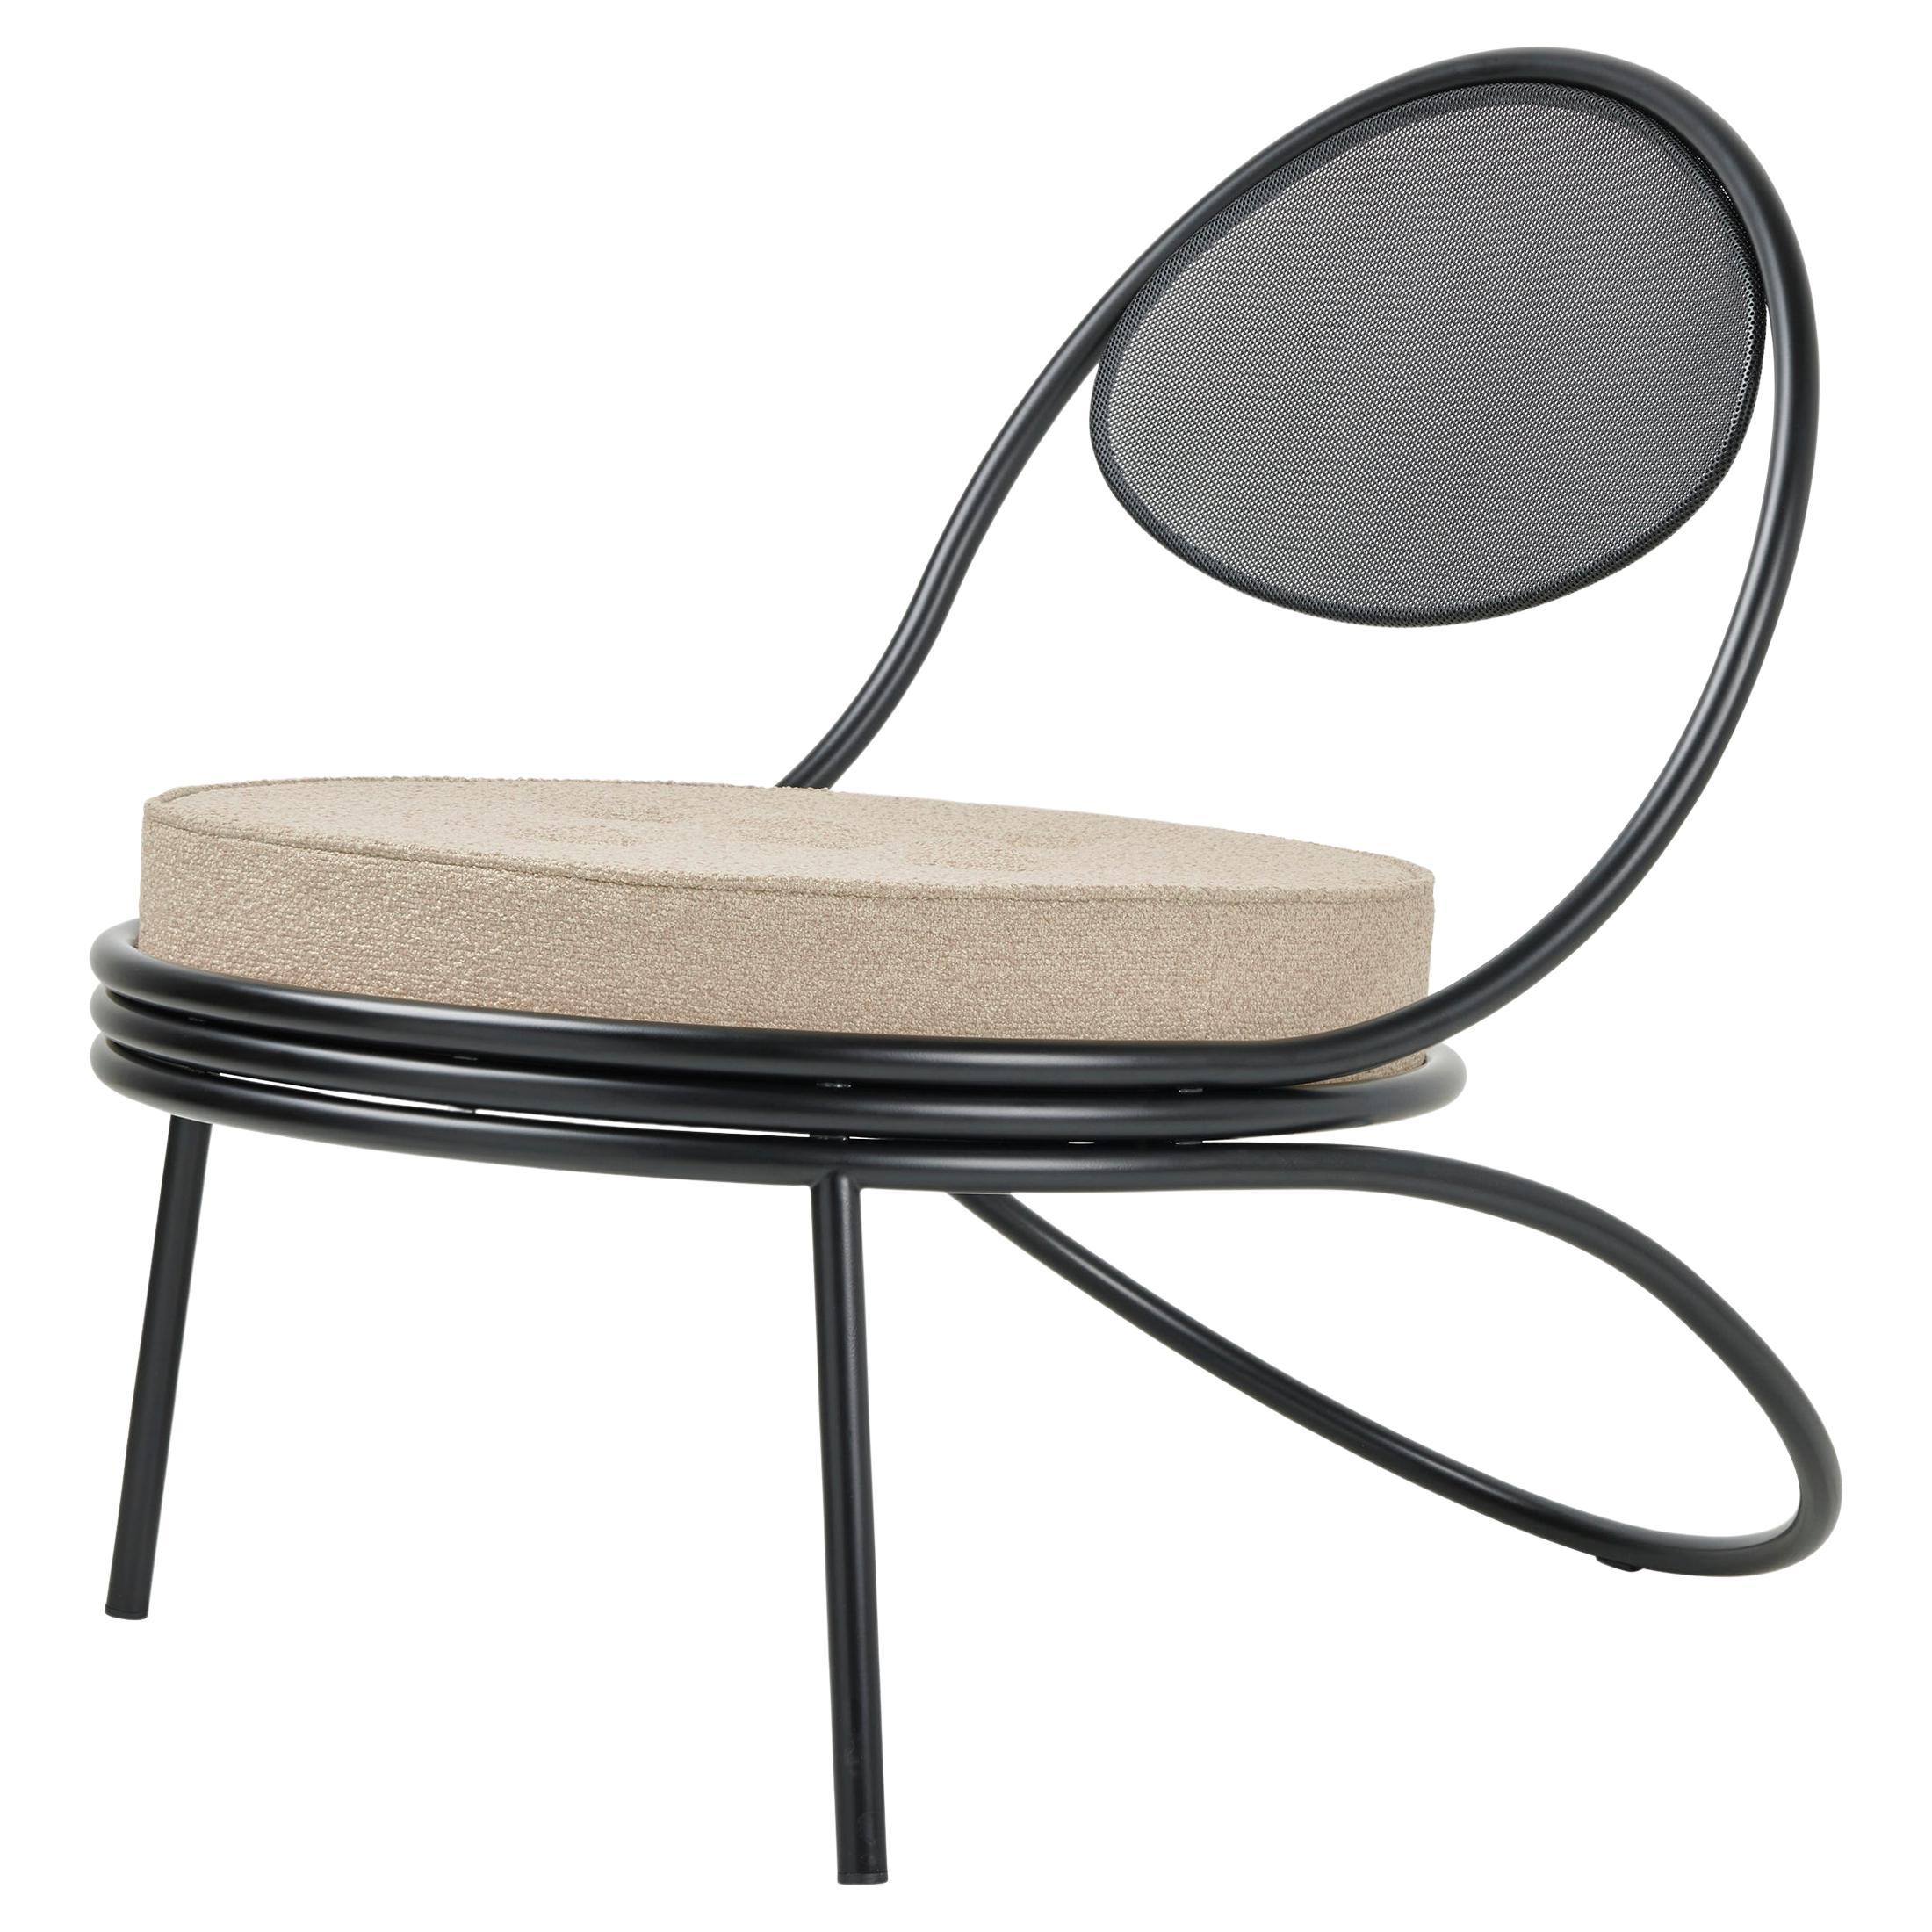 'Copacabana' Indoor Outdoor Lounge Chair by Mathieu Matégot in Lorkey Fabric